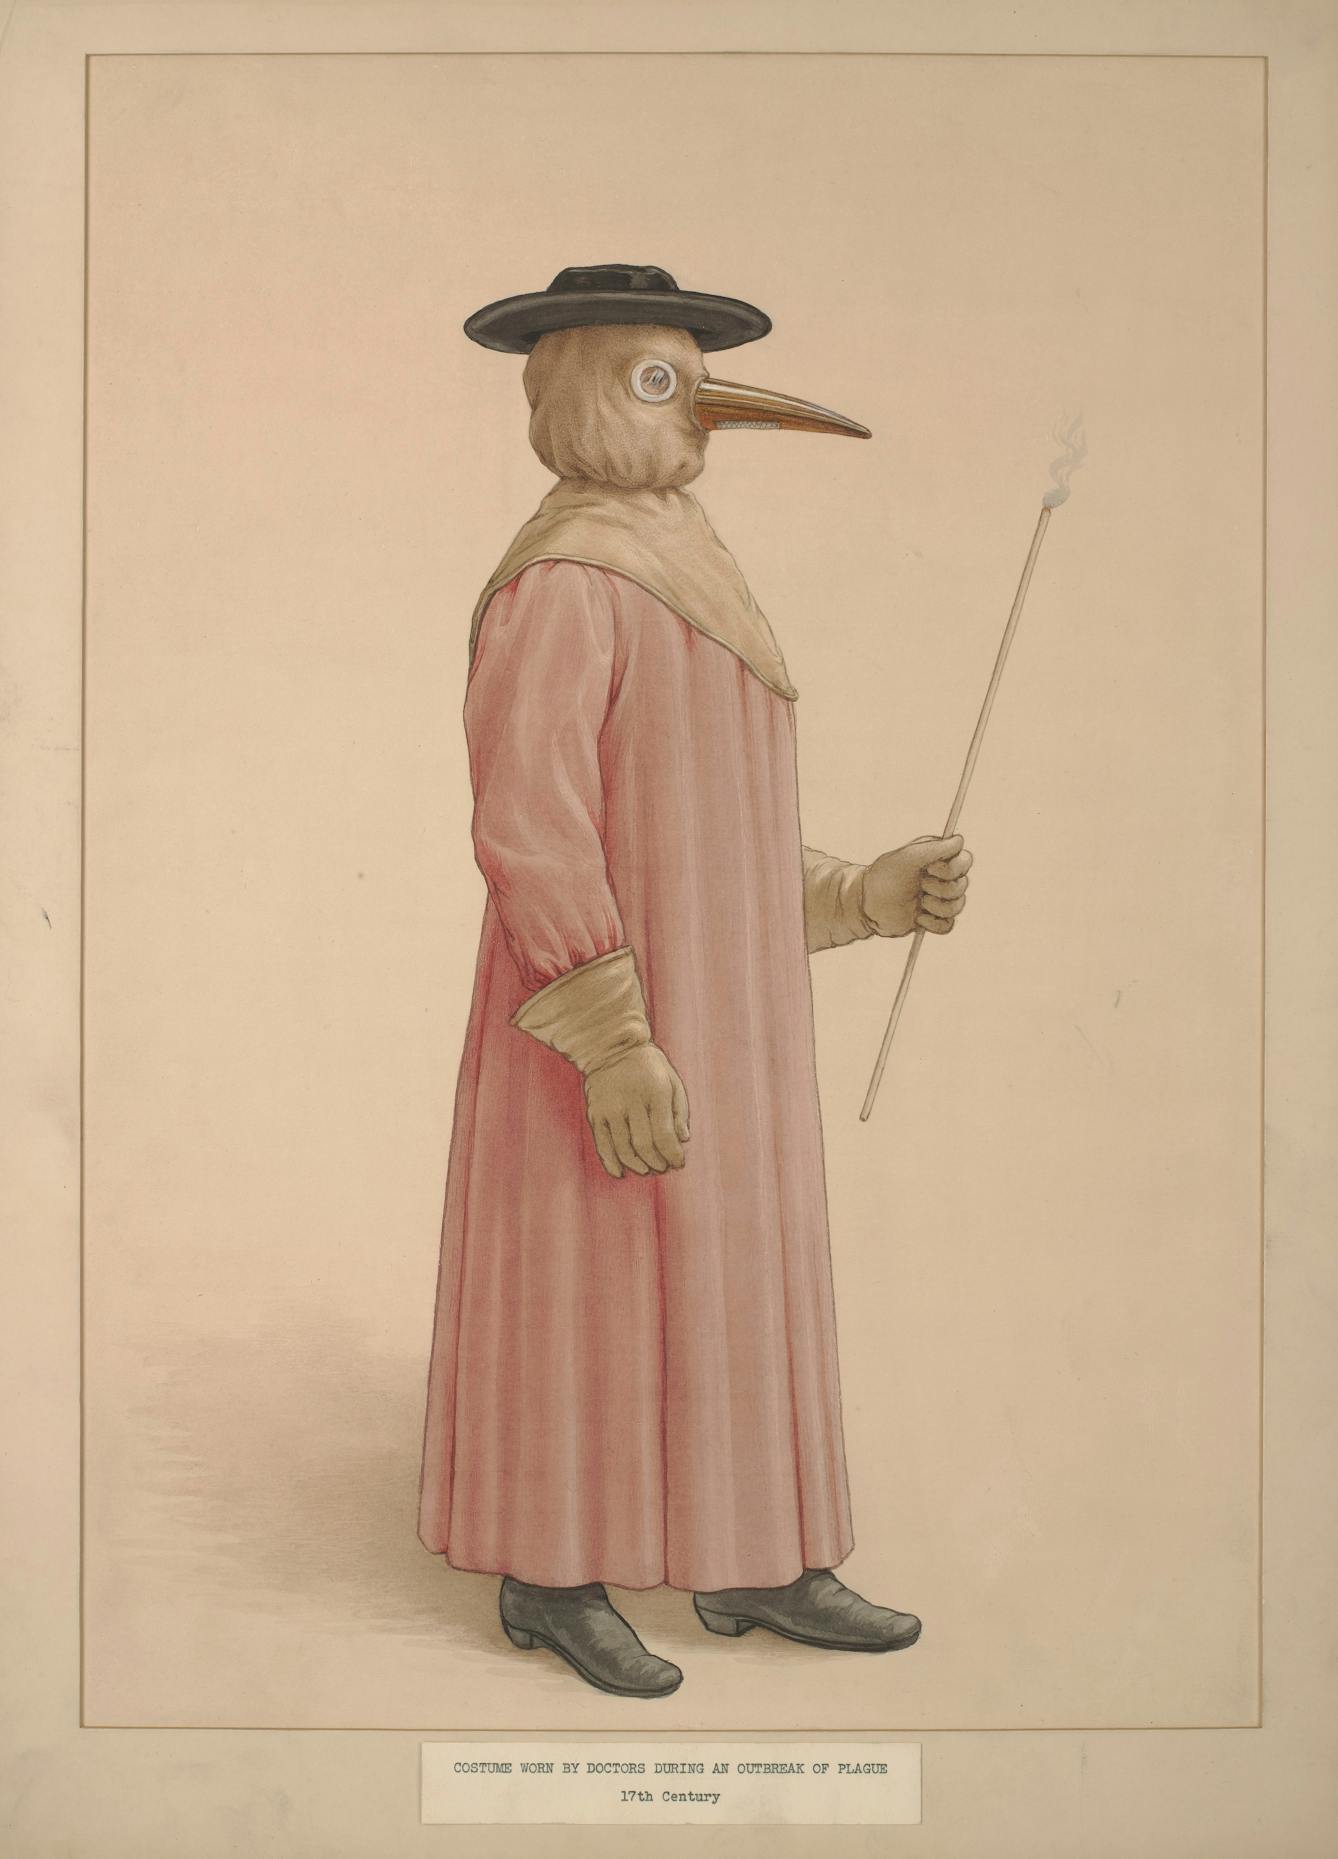 A physician wearing a seventeenth century plague preventive costume